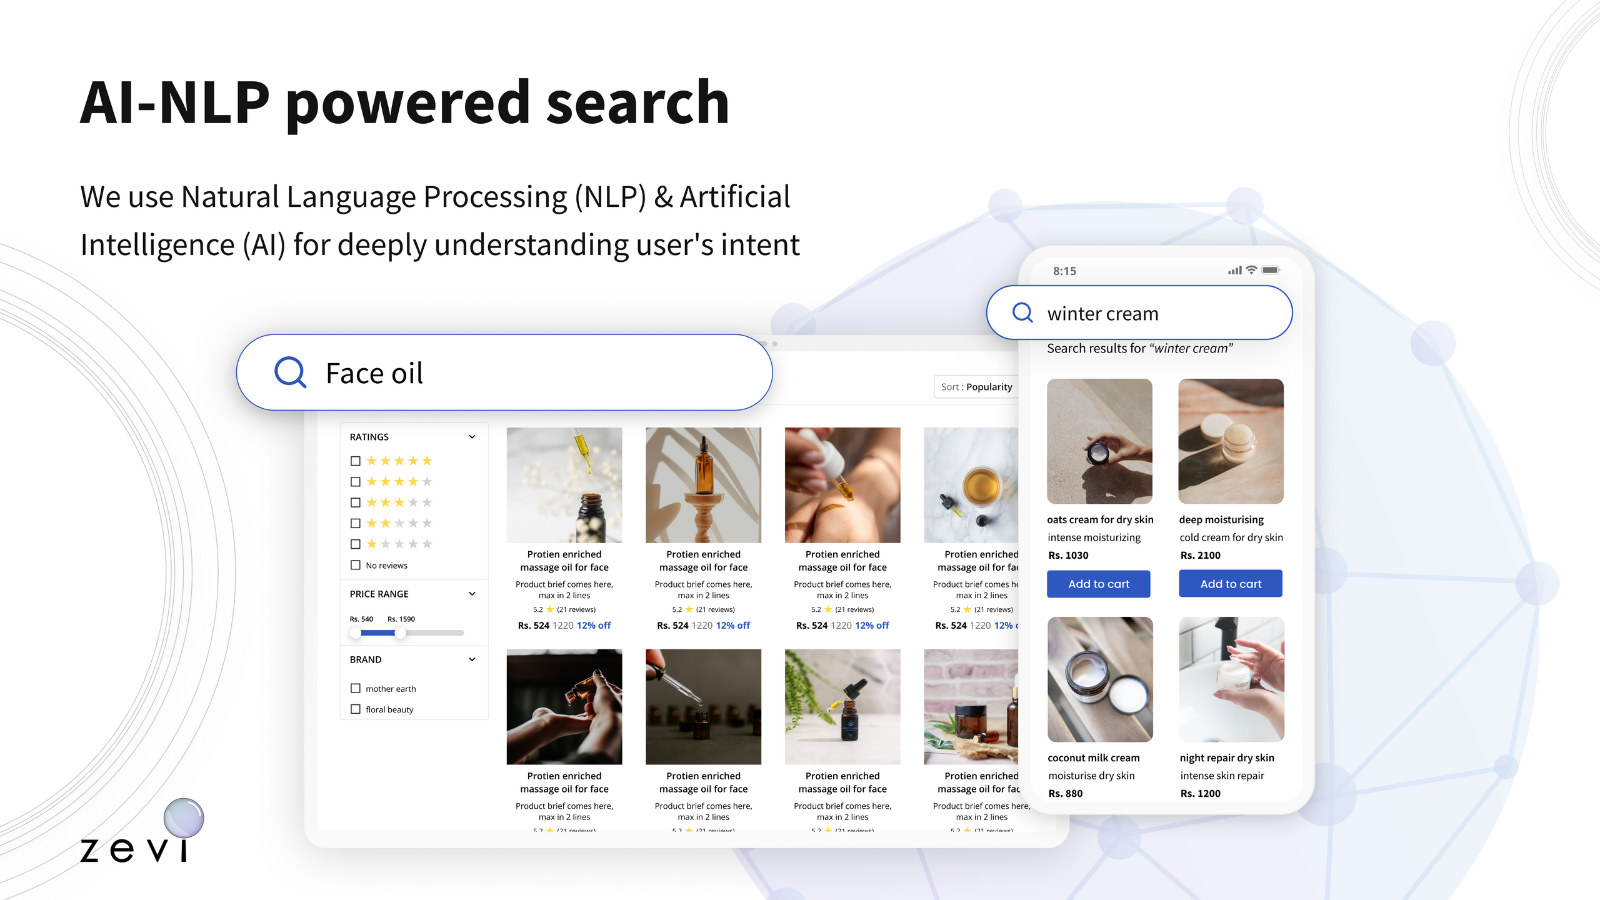 AI-NLP搜索与发现，产品过滤器，集合过滤器